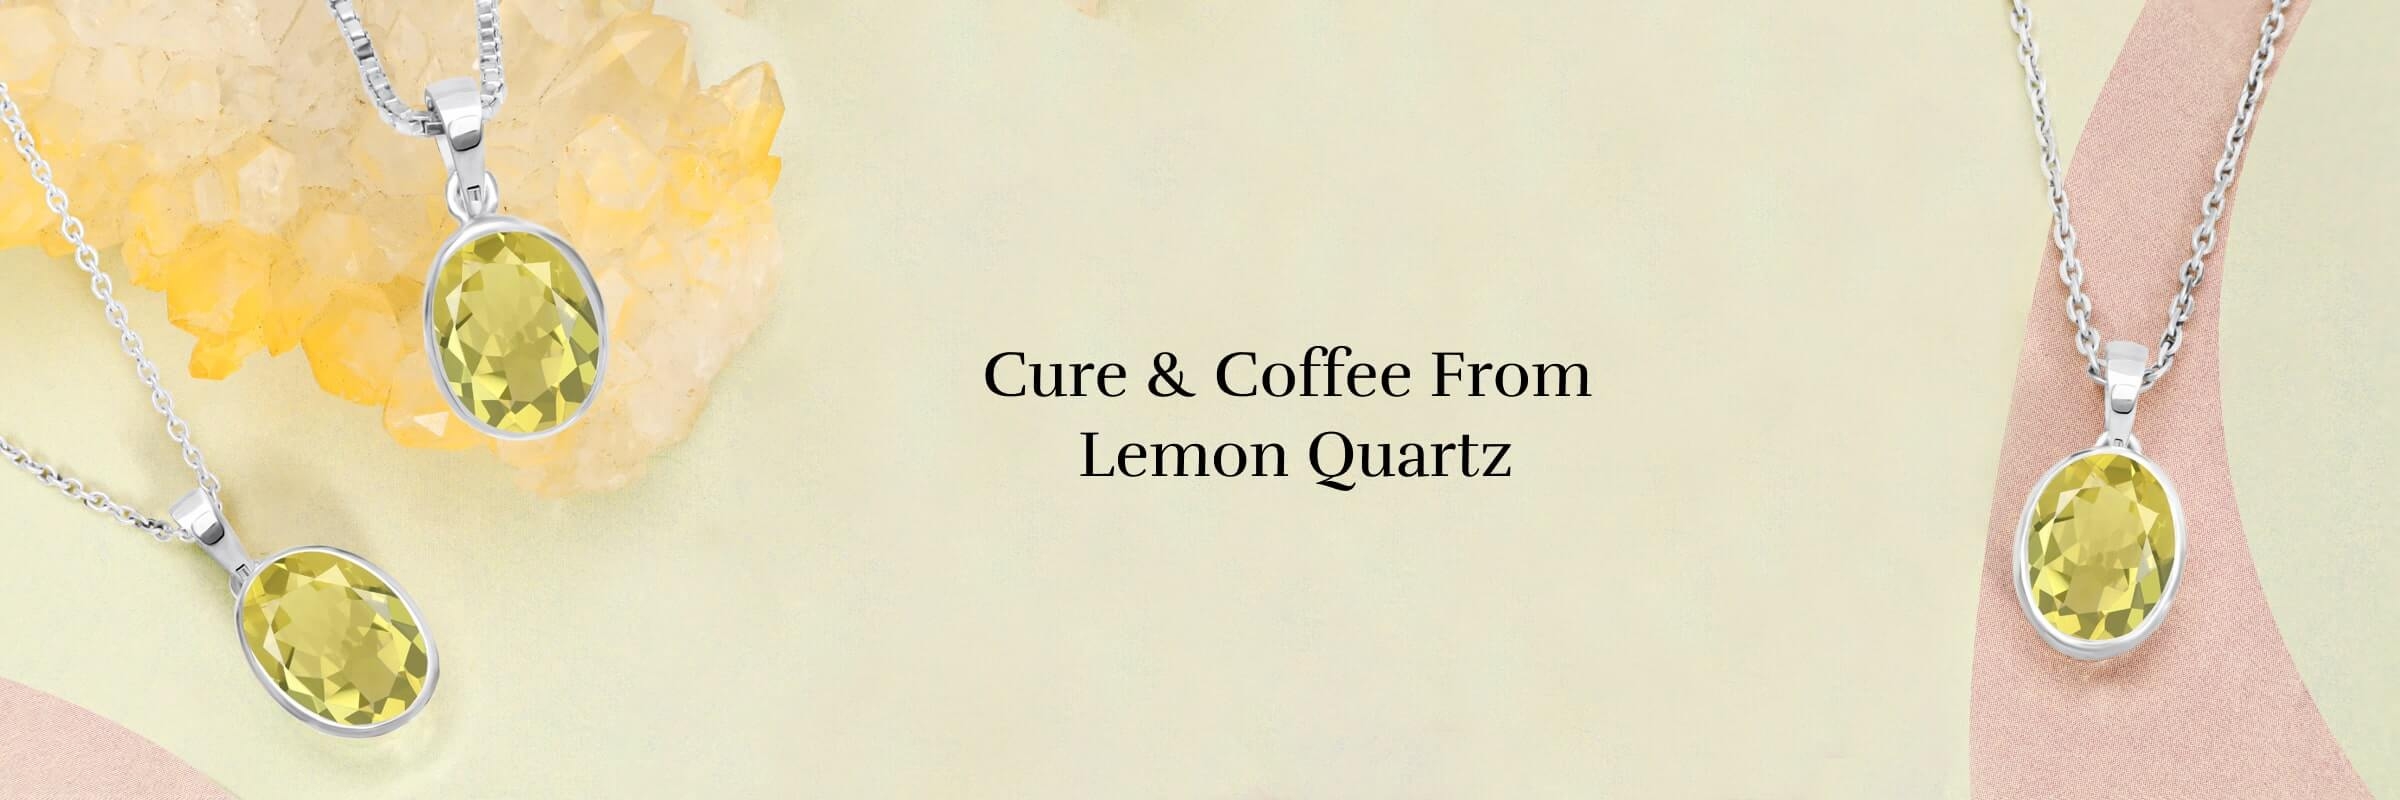 Meaning and Benefits of Lemon Quartz